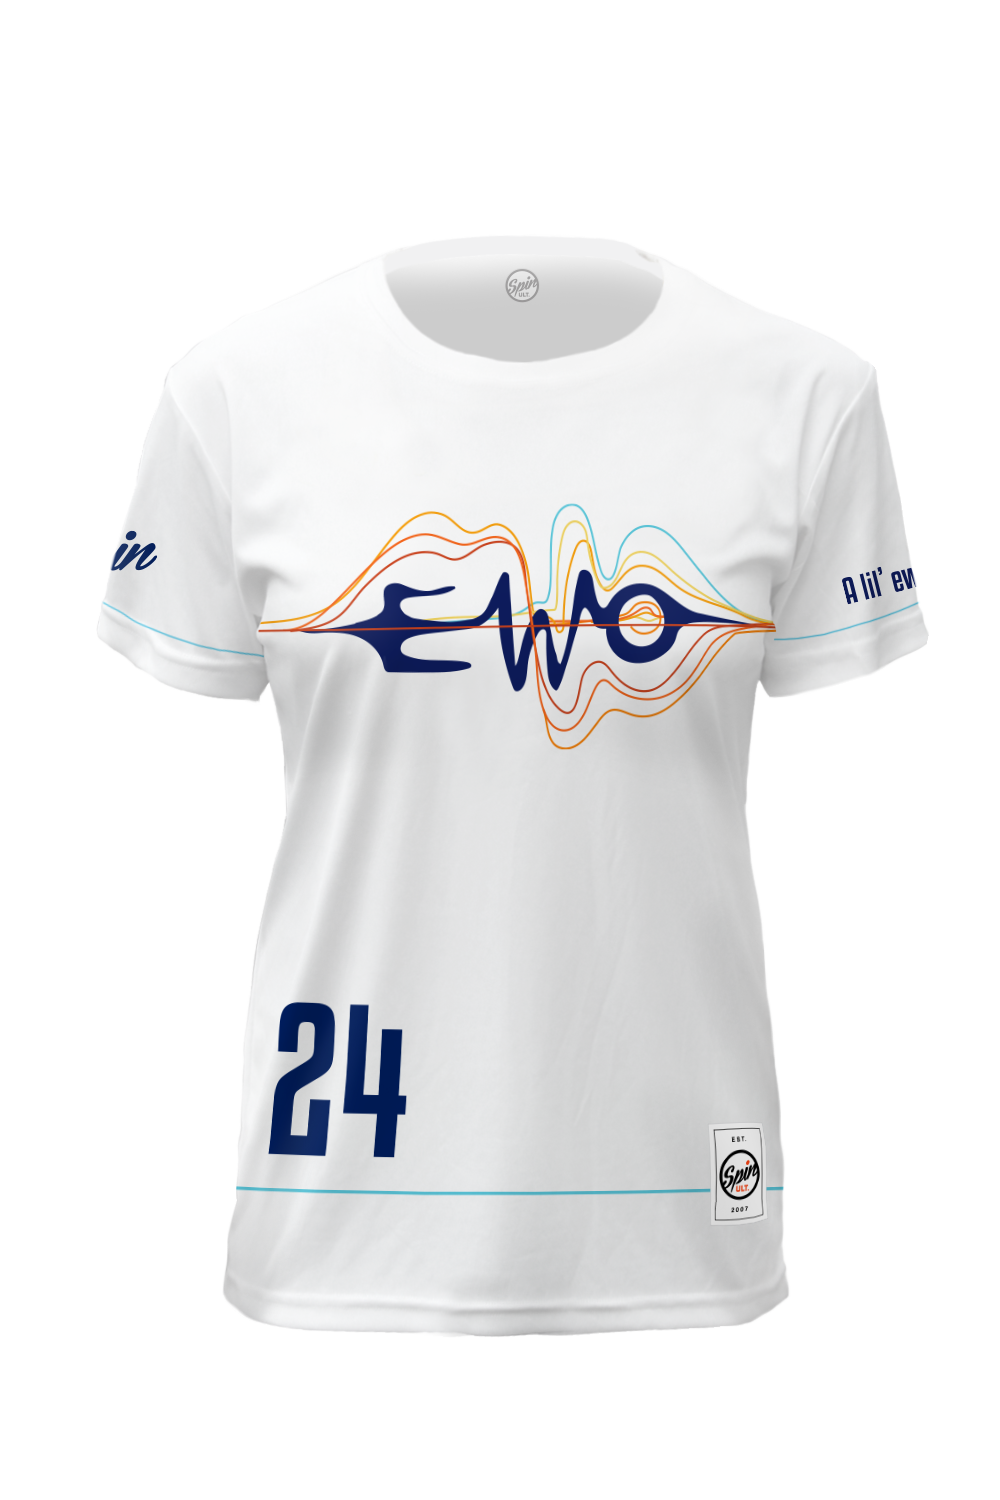 EWO Short Sleeve Jersey (White)